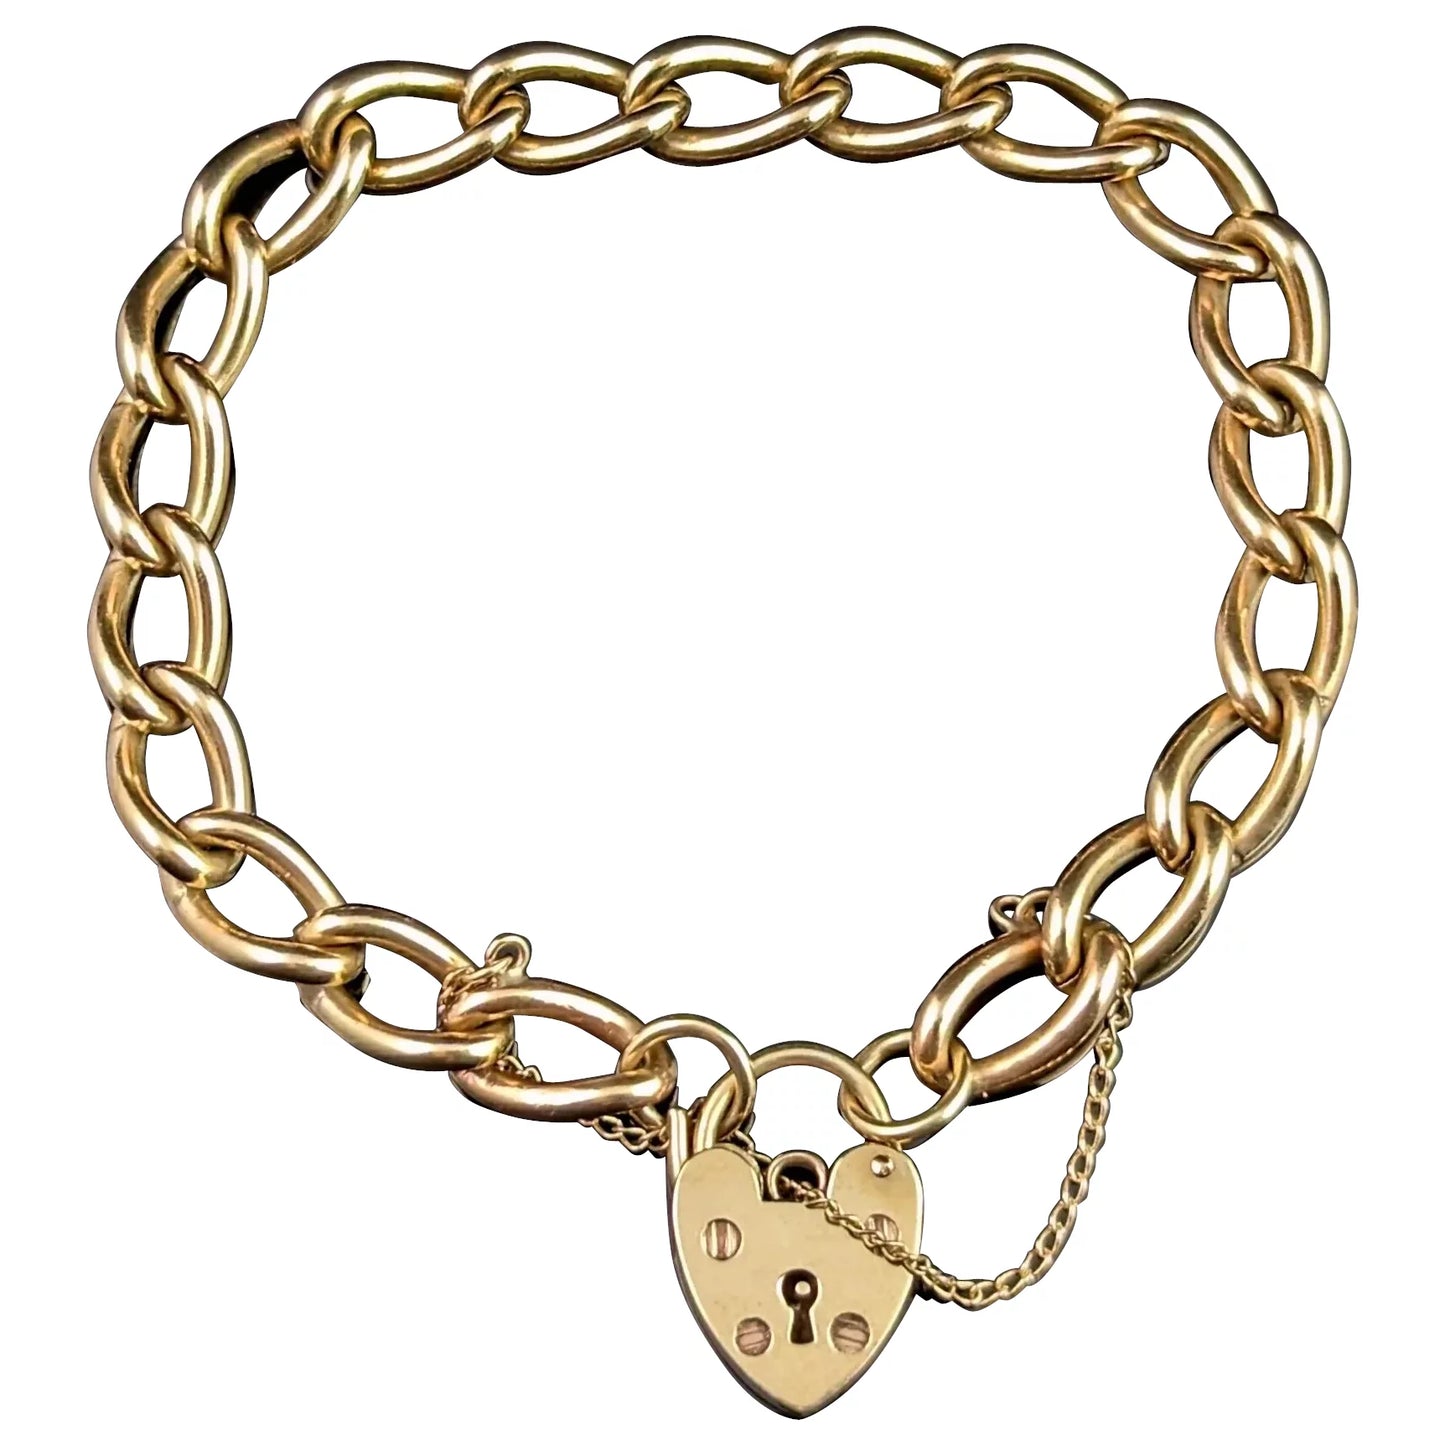 Vintage 9ct gold curb link bracelet, heart padlock clasp